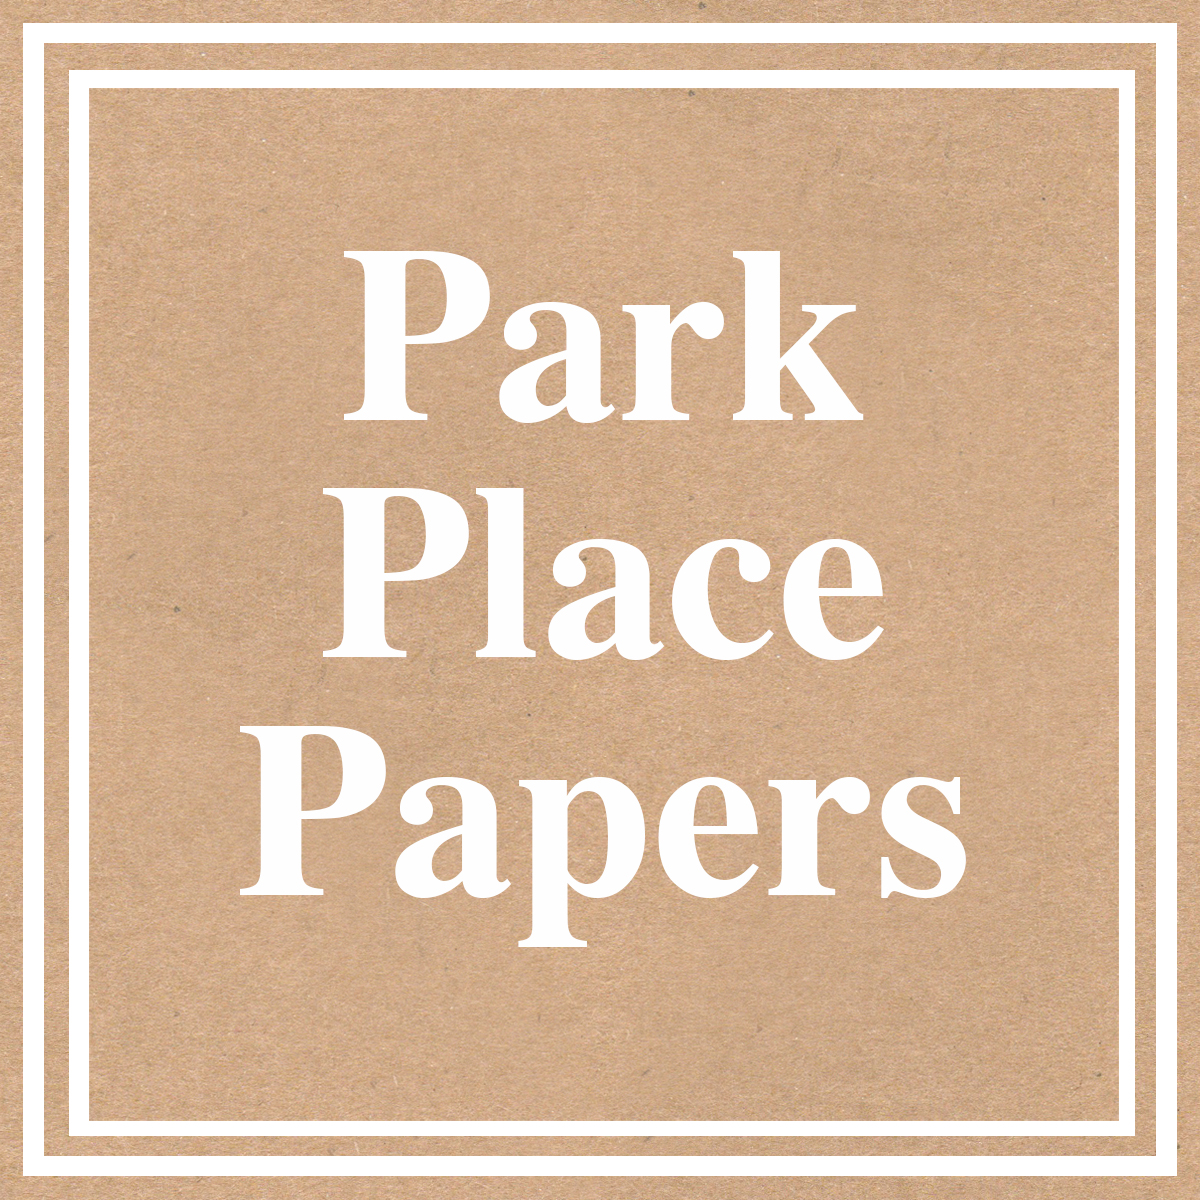 Park Place Papers